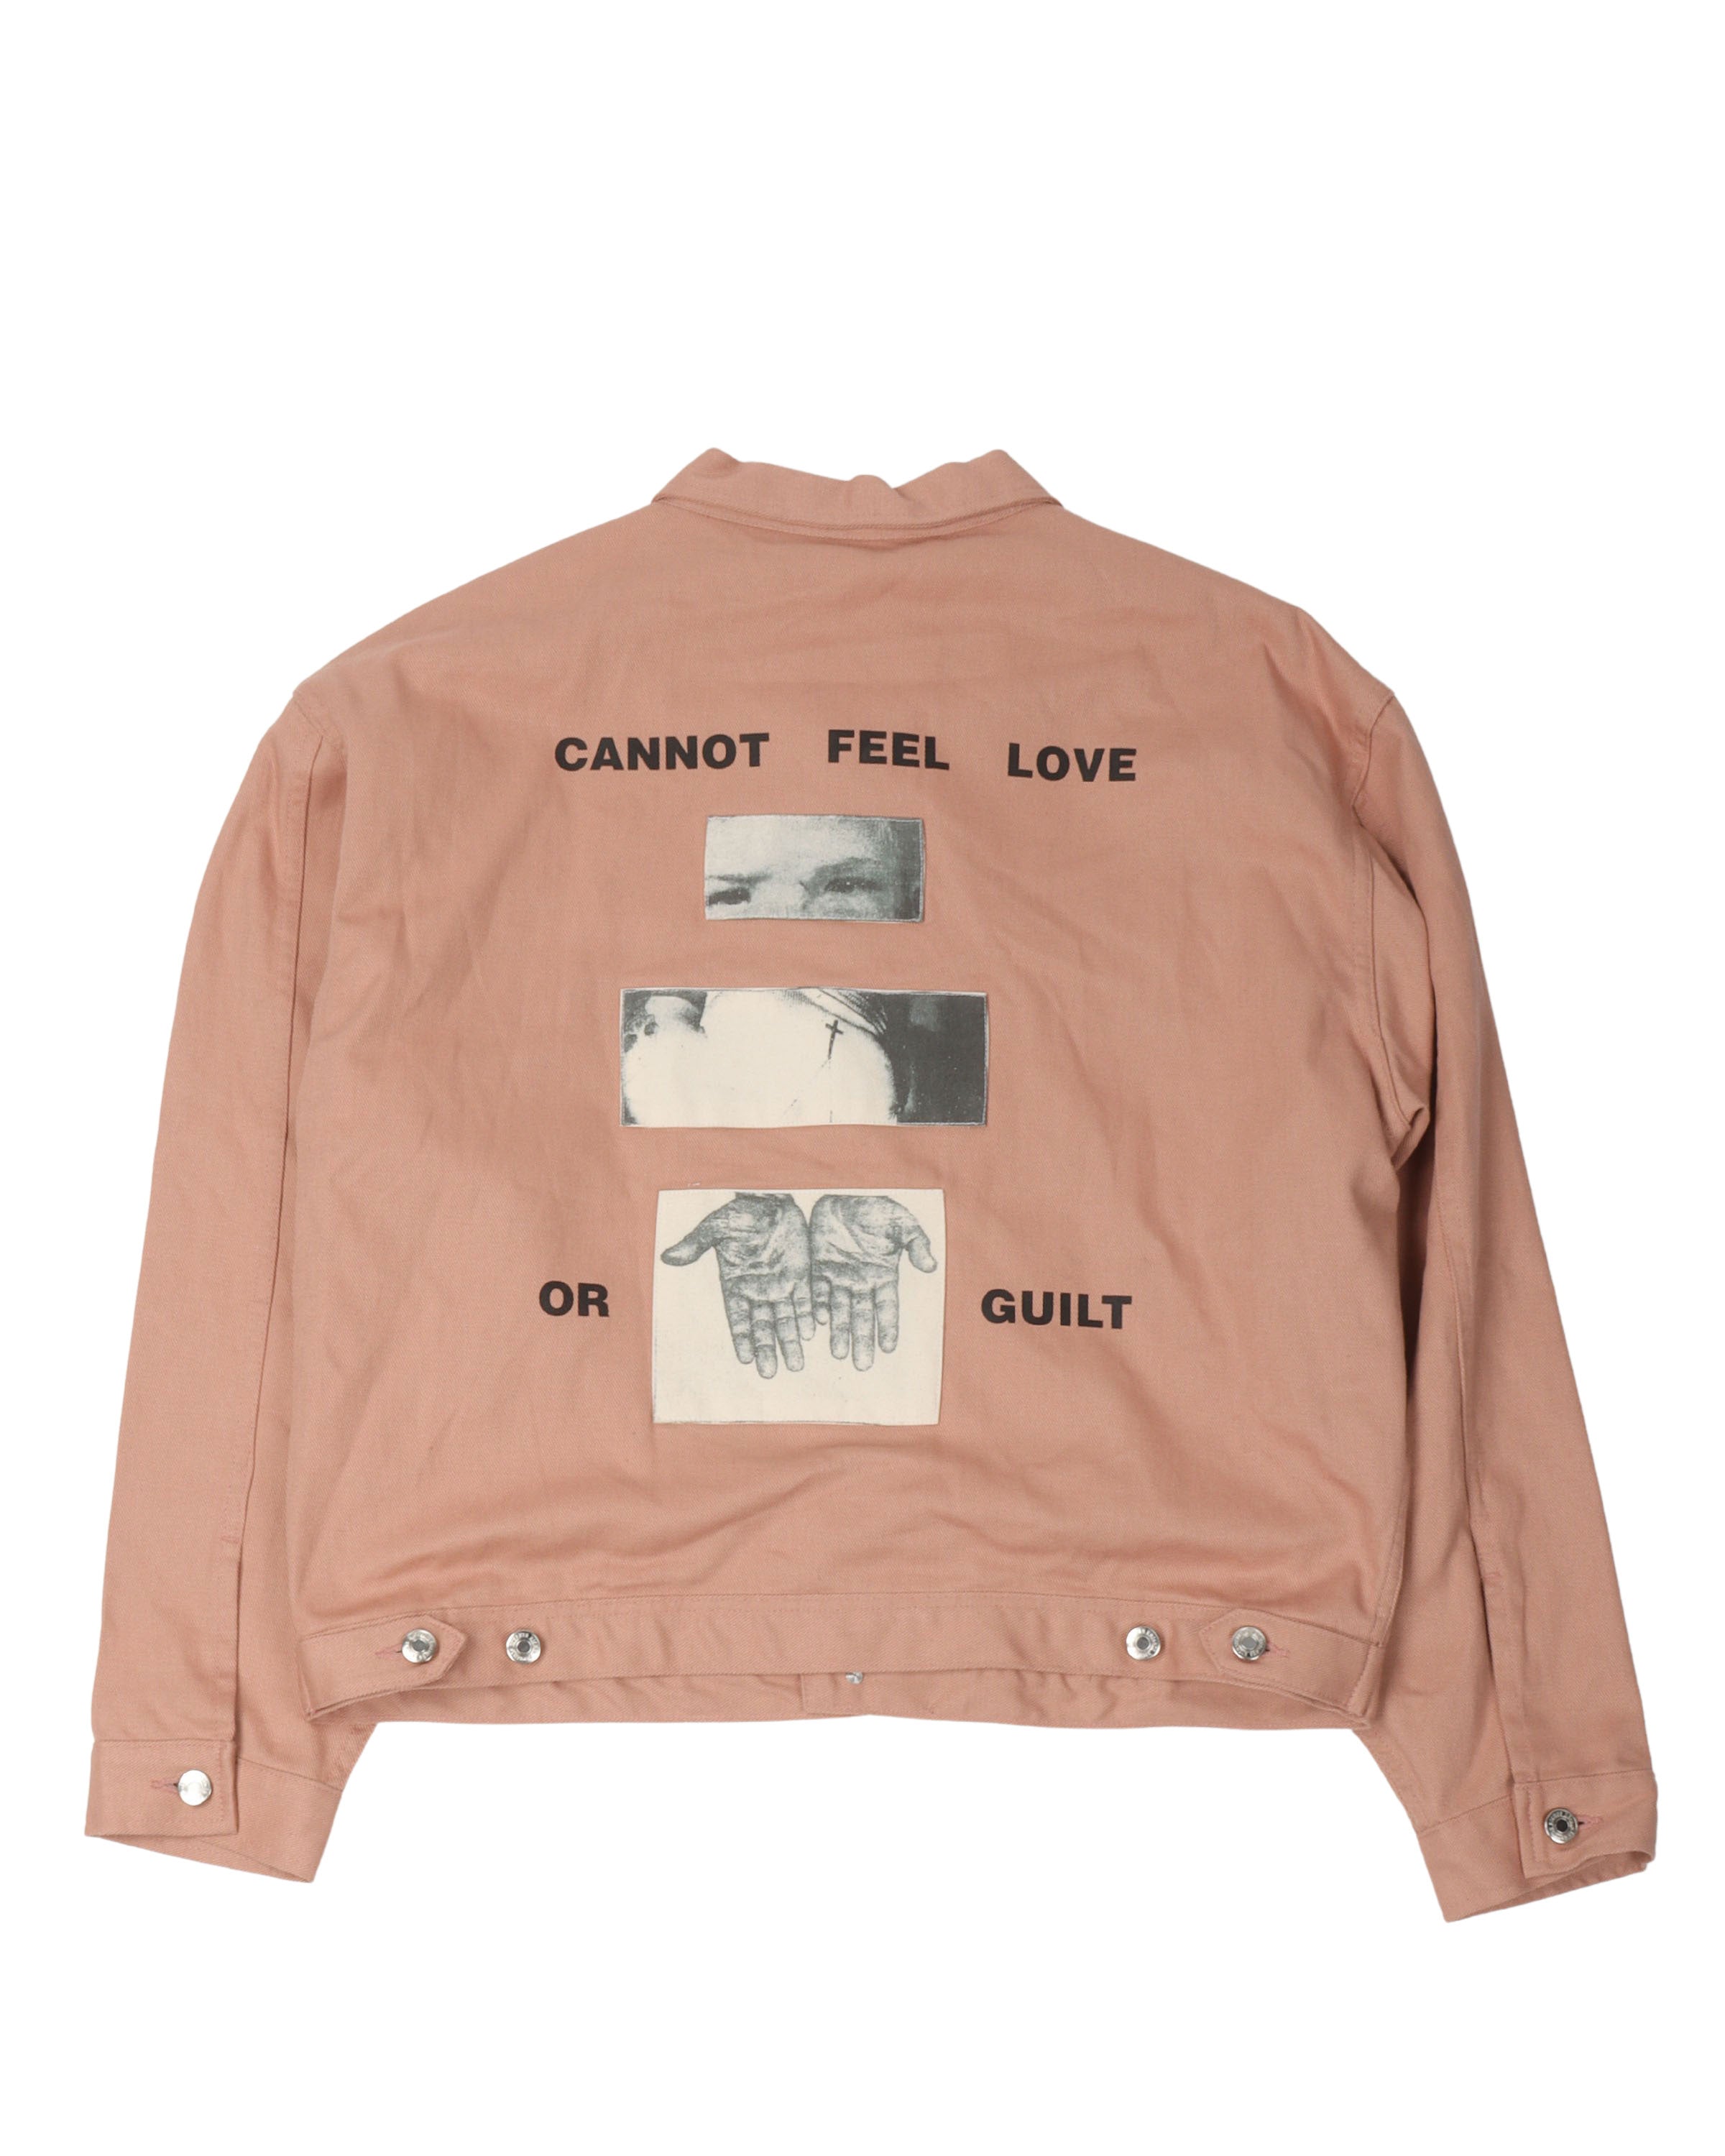 "Cannot Feel Love or Guilt" Denim Jacket